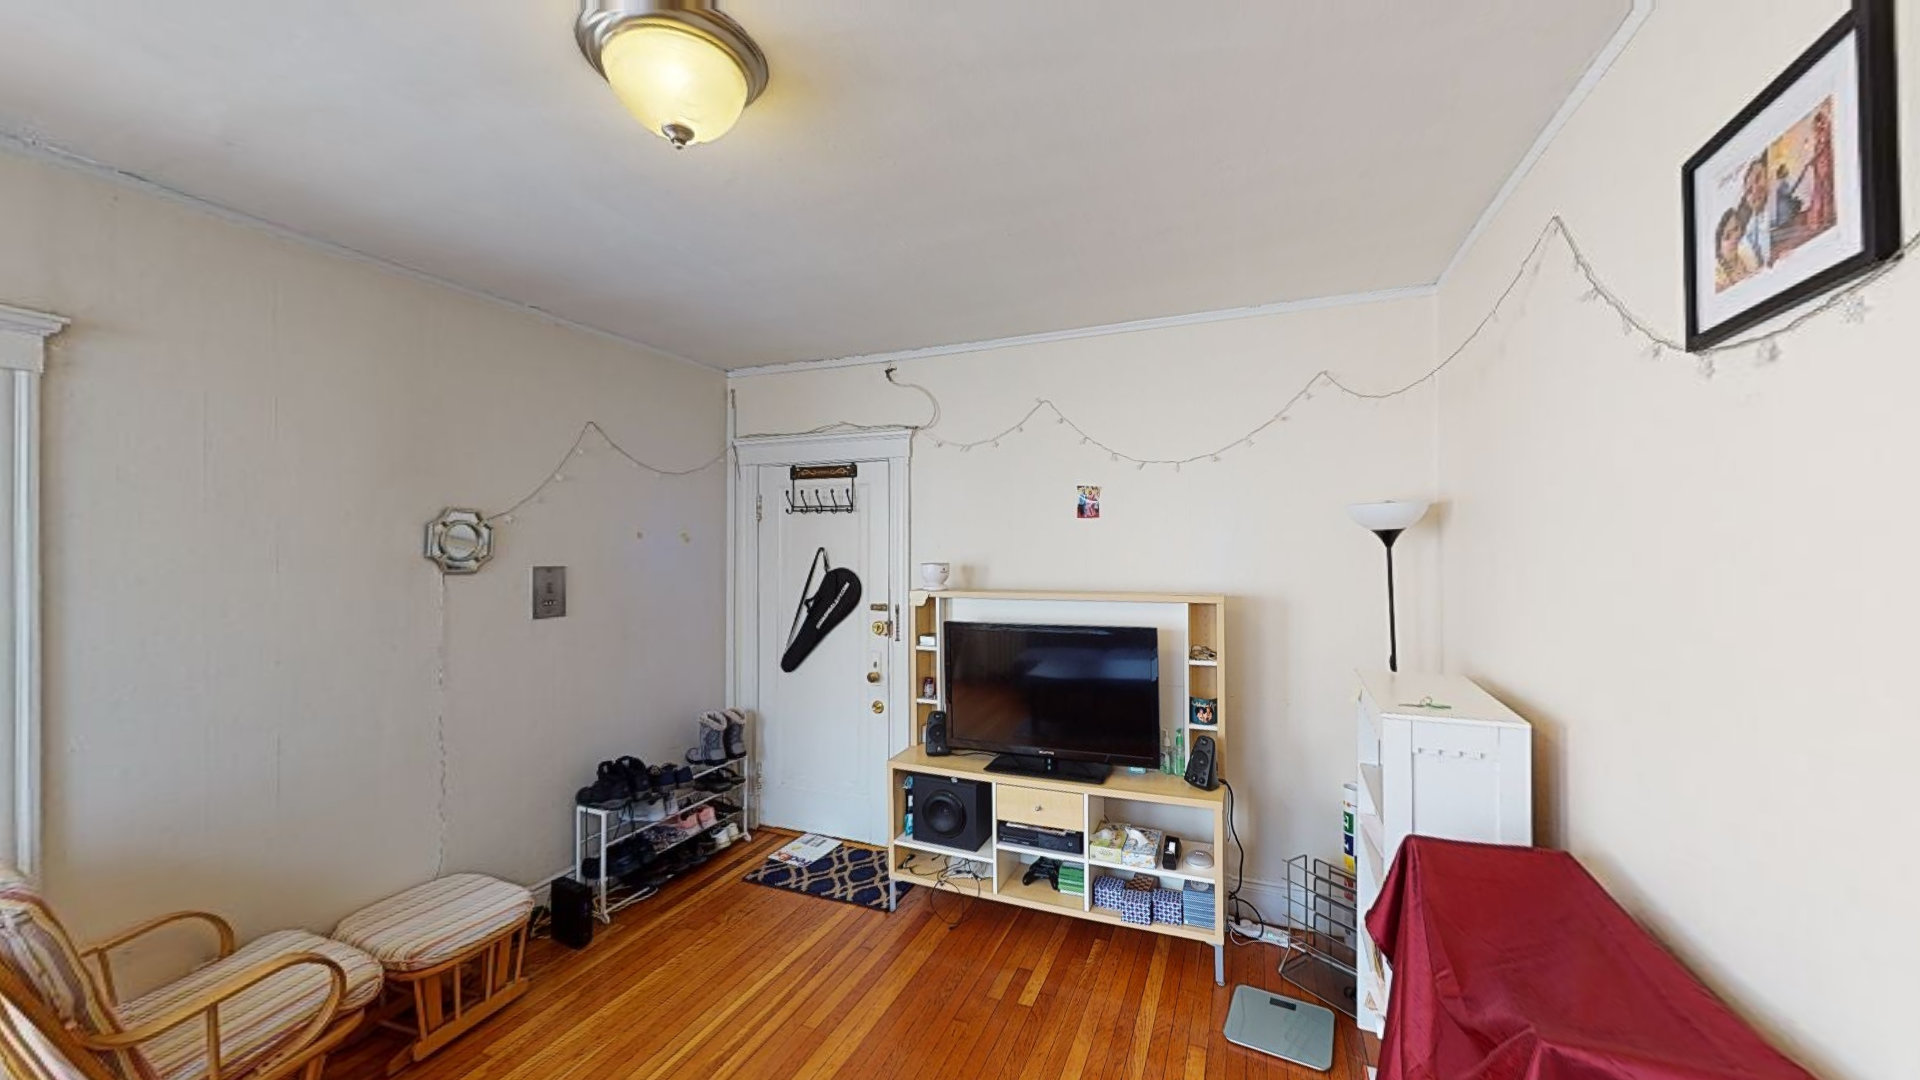 Photos of apartment on Linden St.,Boston MA 02134